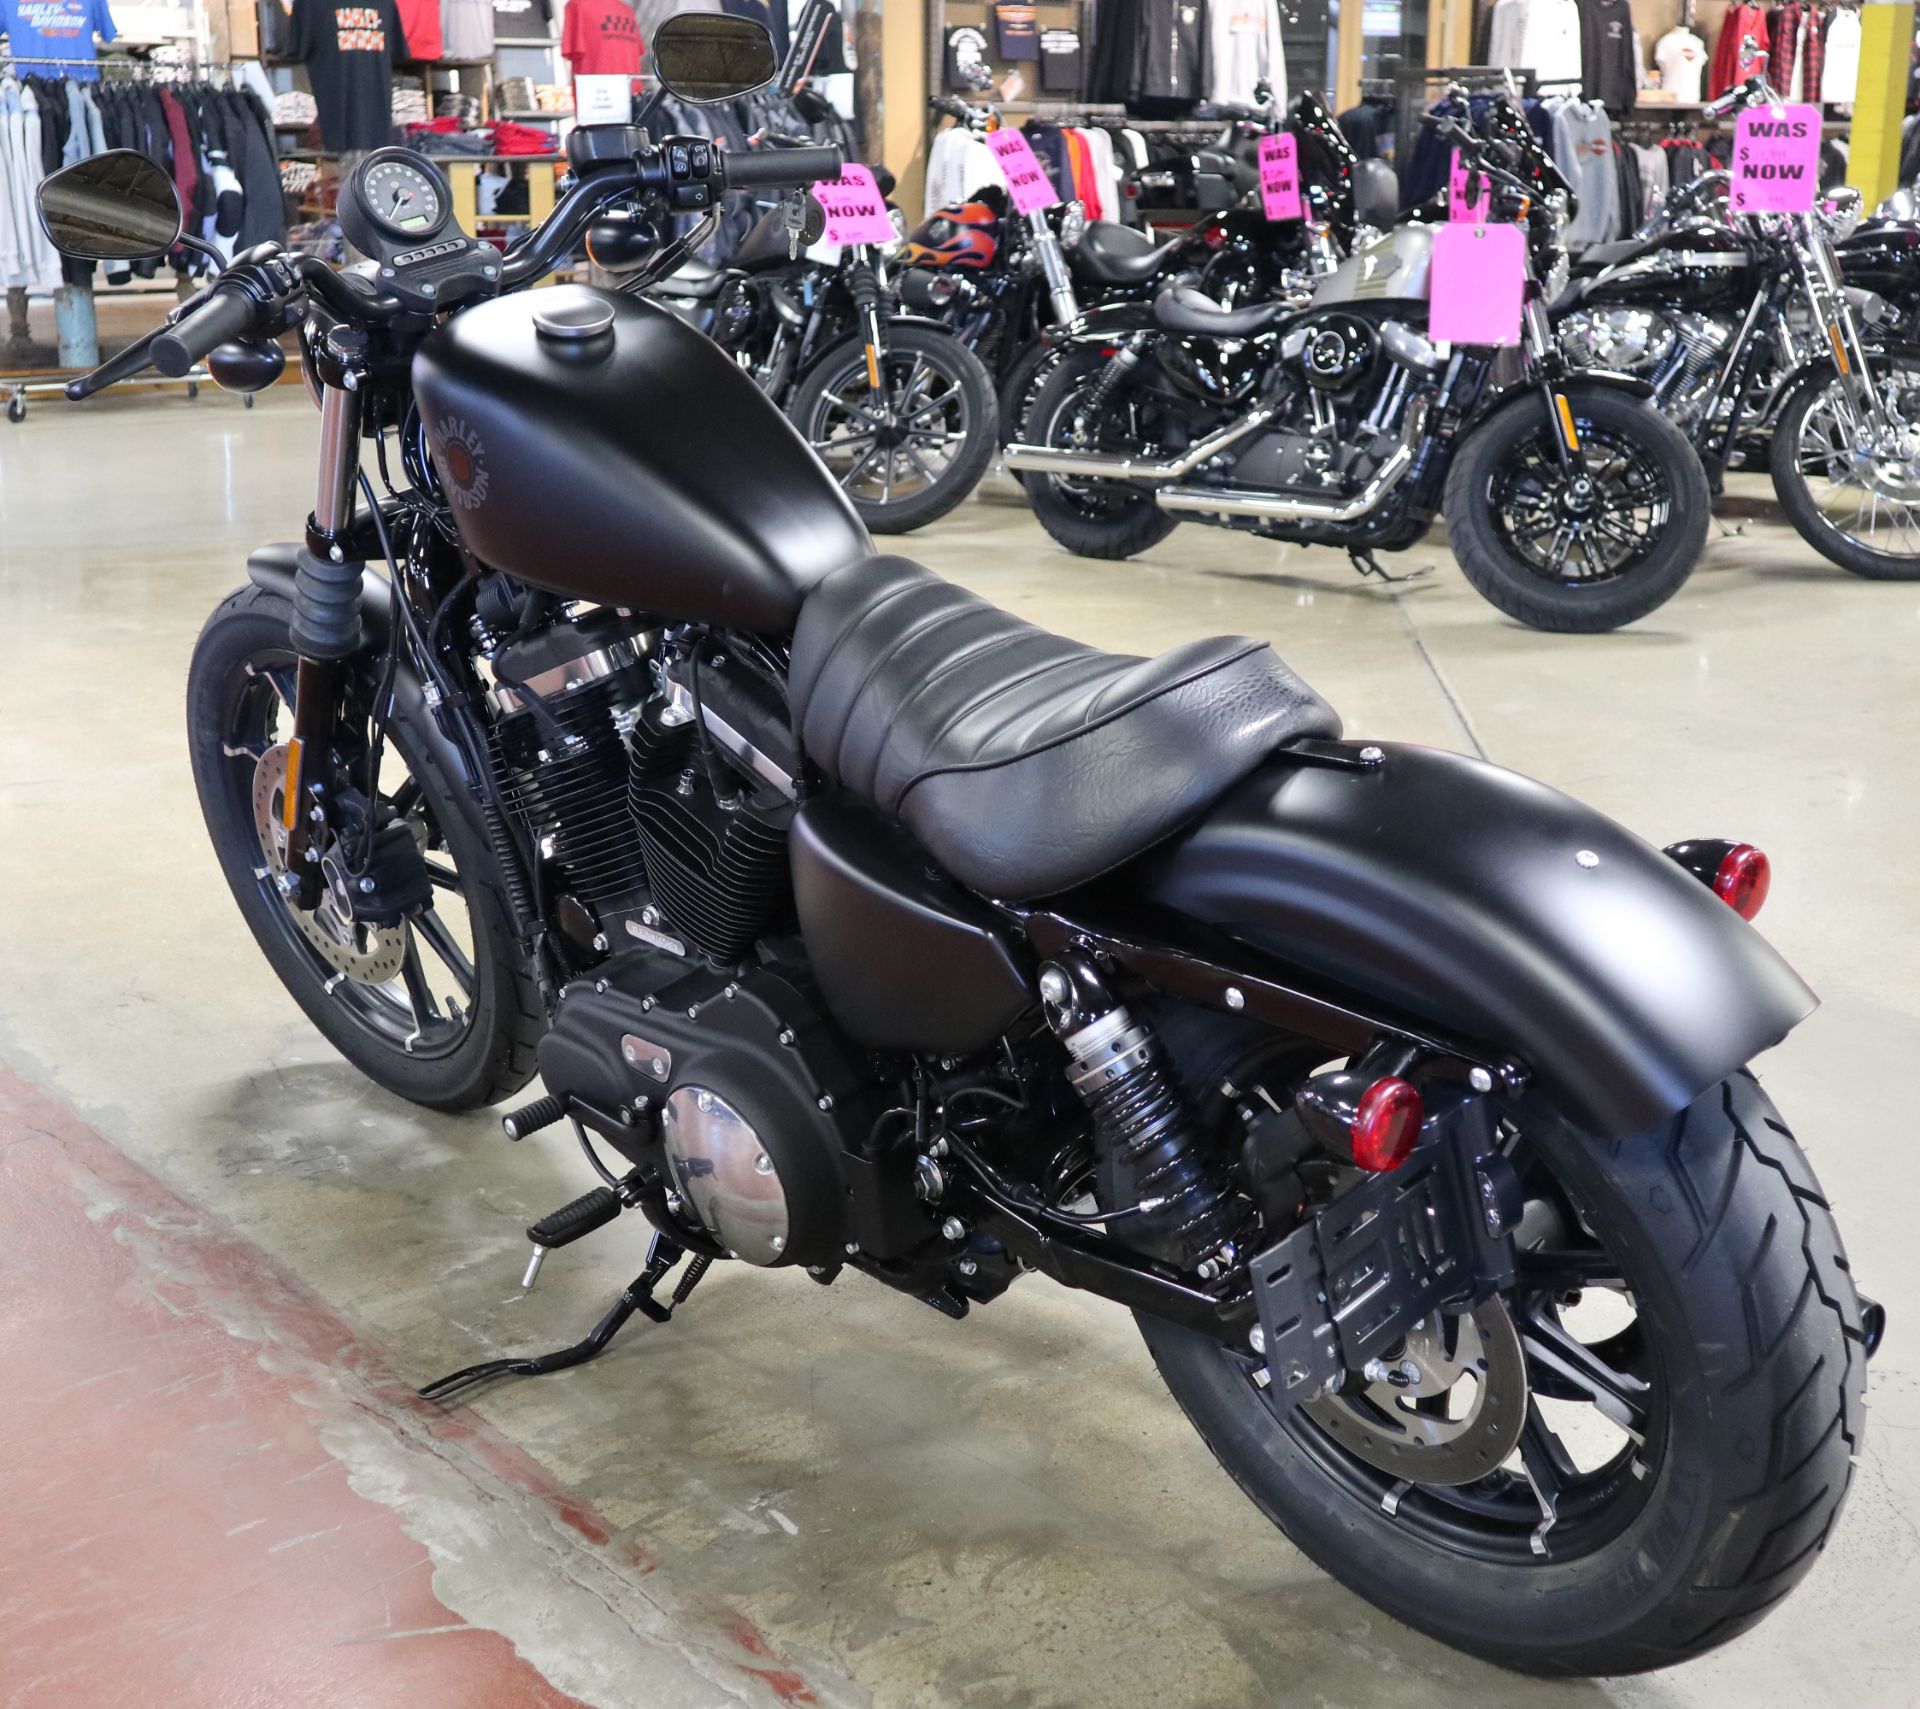 2022 Harley-Davidson Iron 883™ in New London, Connecticut - Photo 6